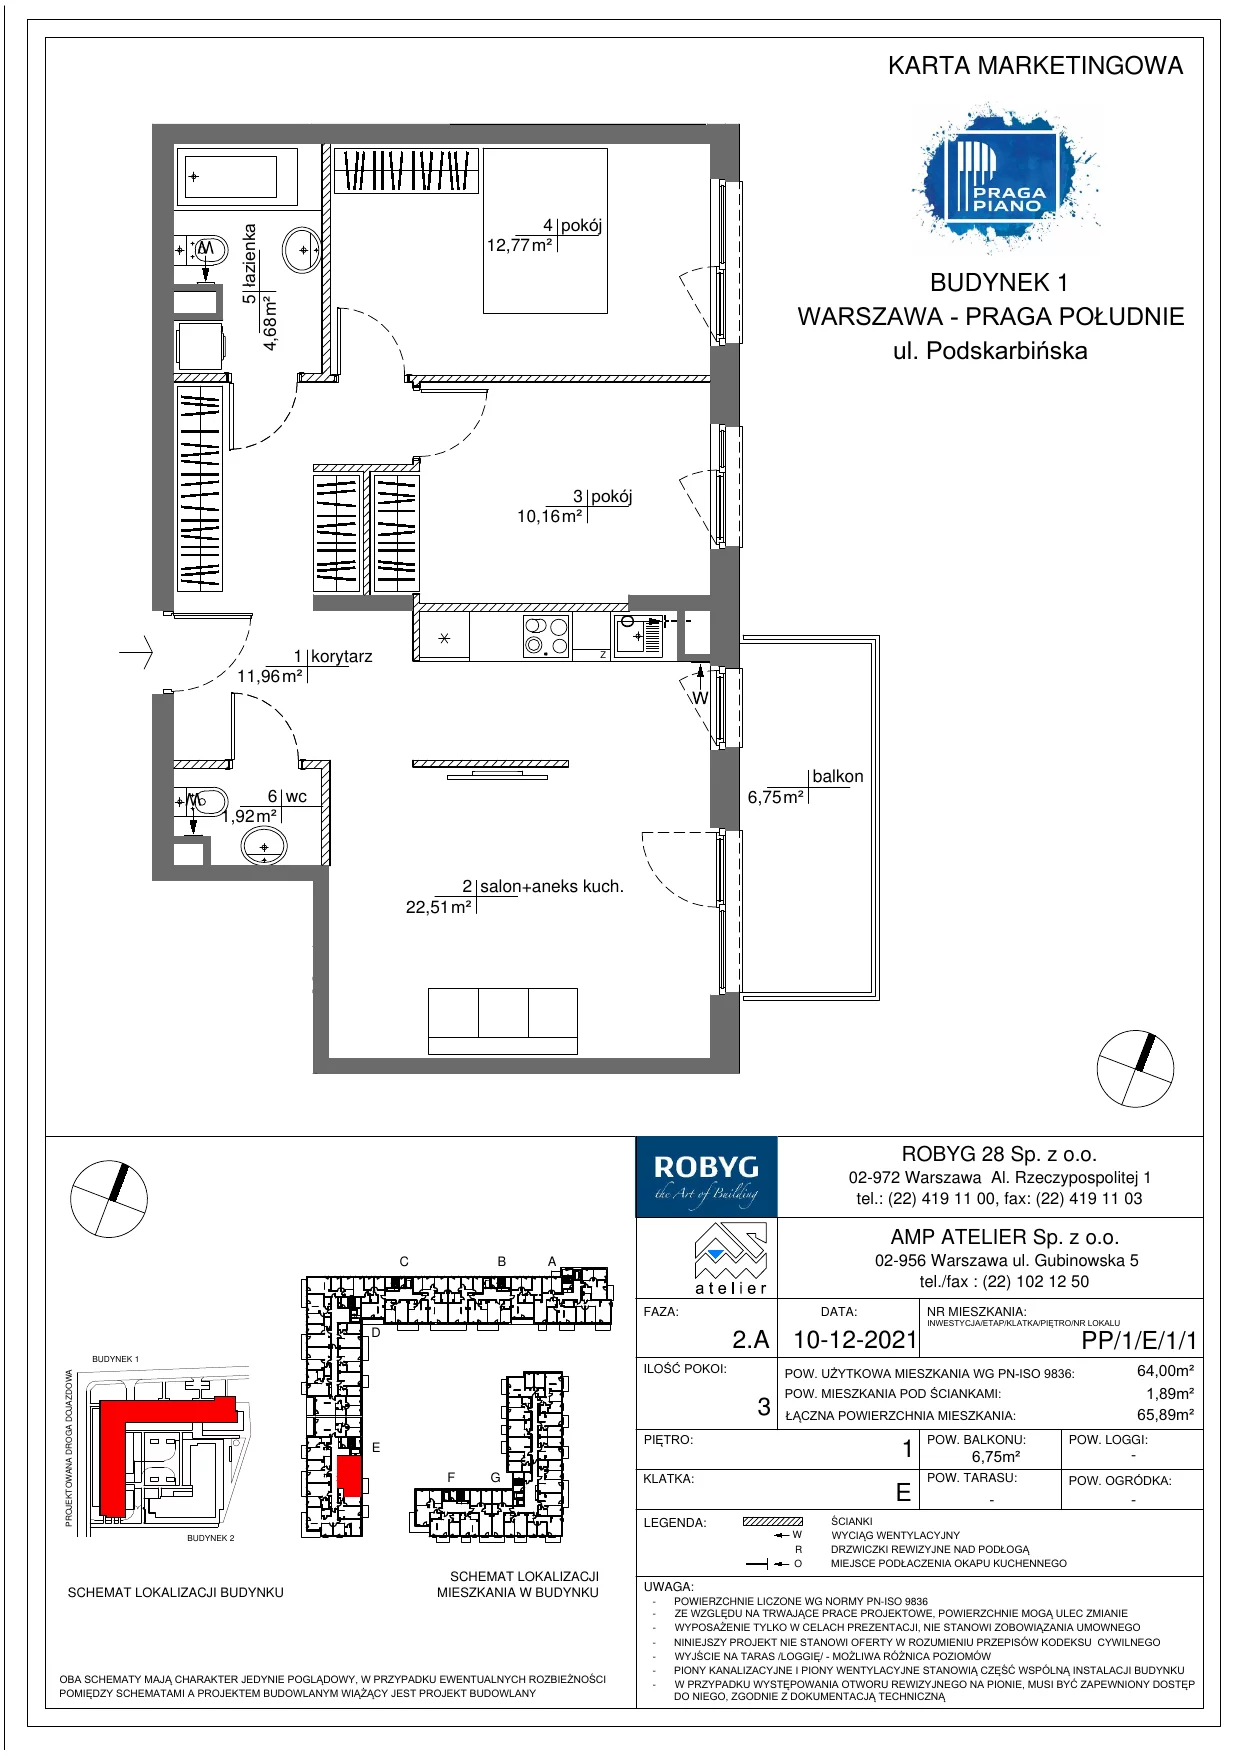 Mieszkanie 64,00 m², piętro 1, oferta nr PP/1/E/1/1, Praga Piano, Warszawa, Praga Południe, Kamionek, ul. Podskarbińska